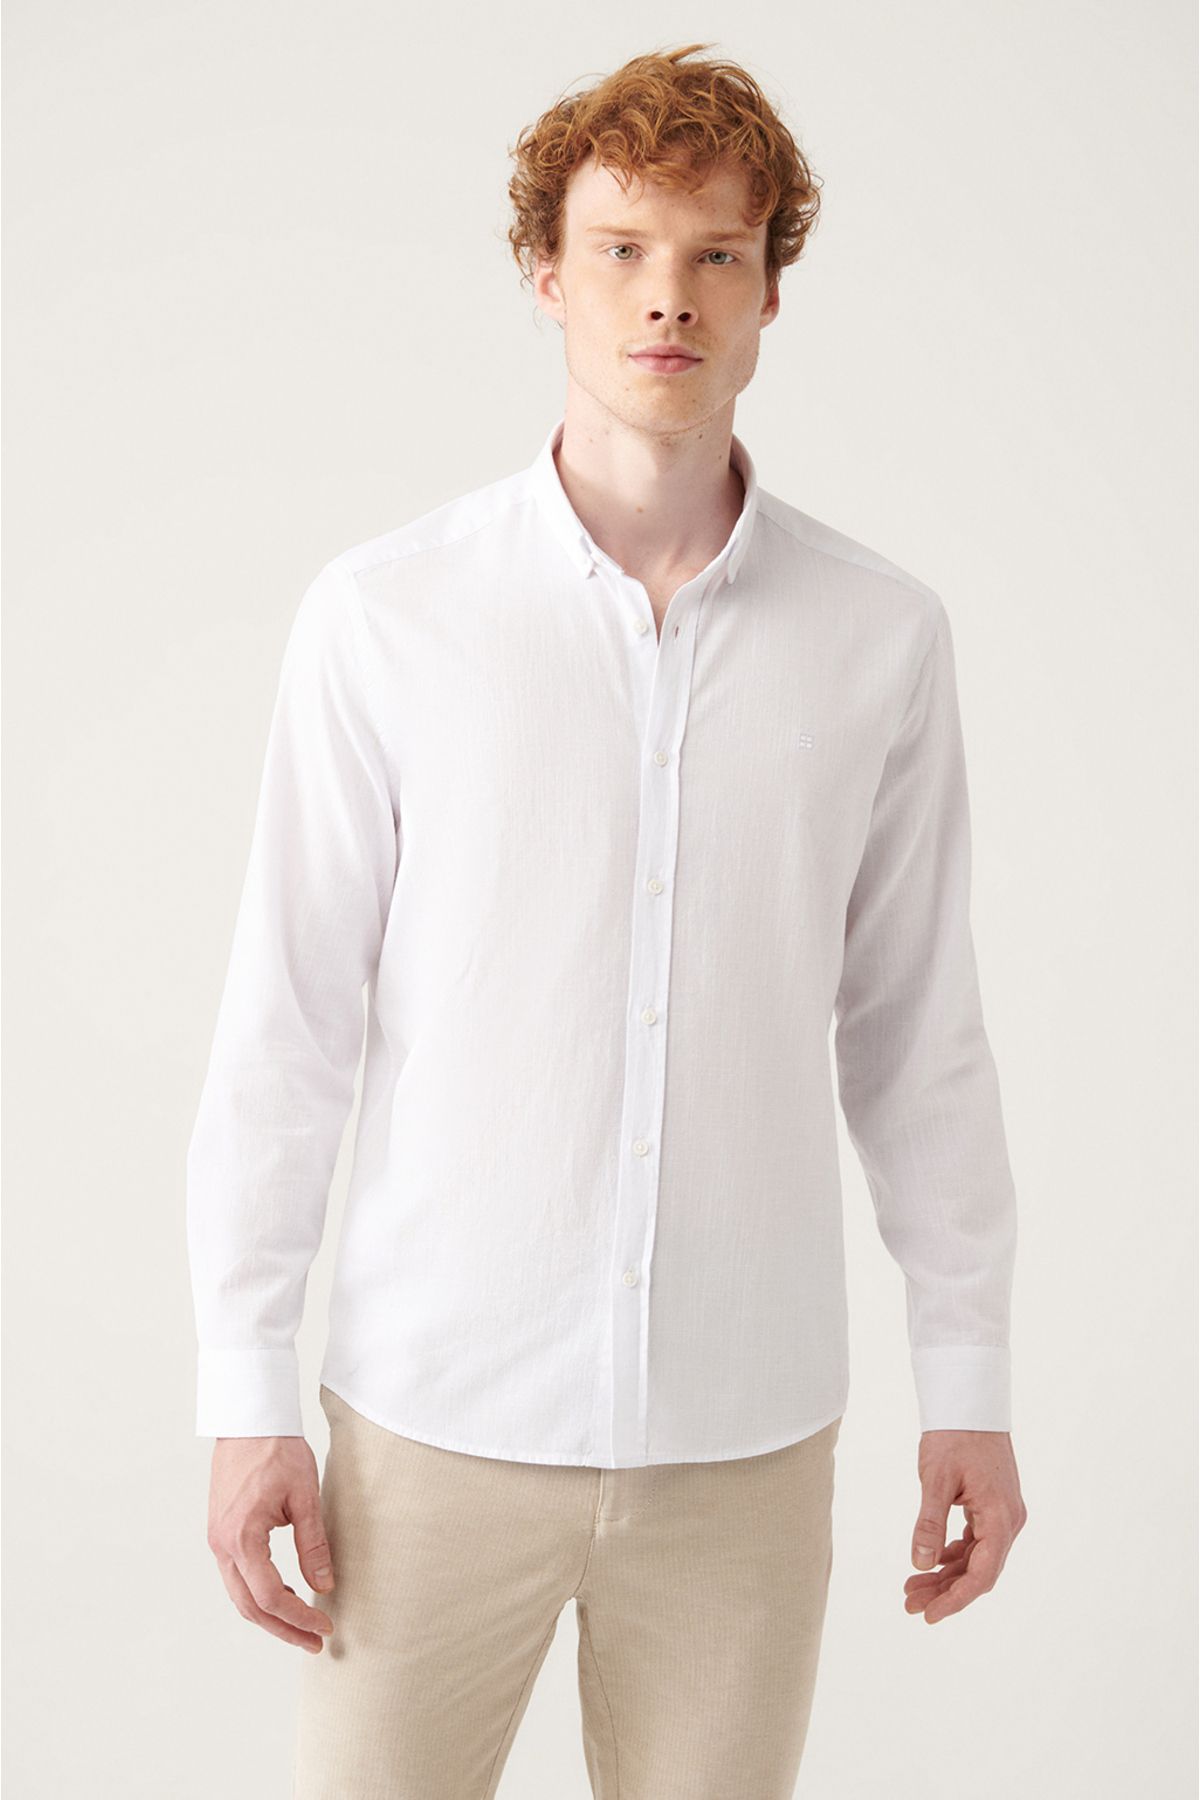 Avva Erkek Beyaz Düğmeli Yaka Comfort Fit %100 Pamuk Keten Dokulu Gömlek E002141